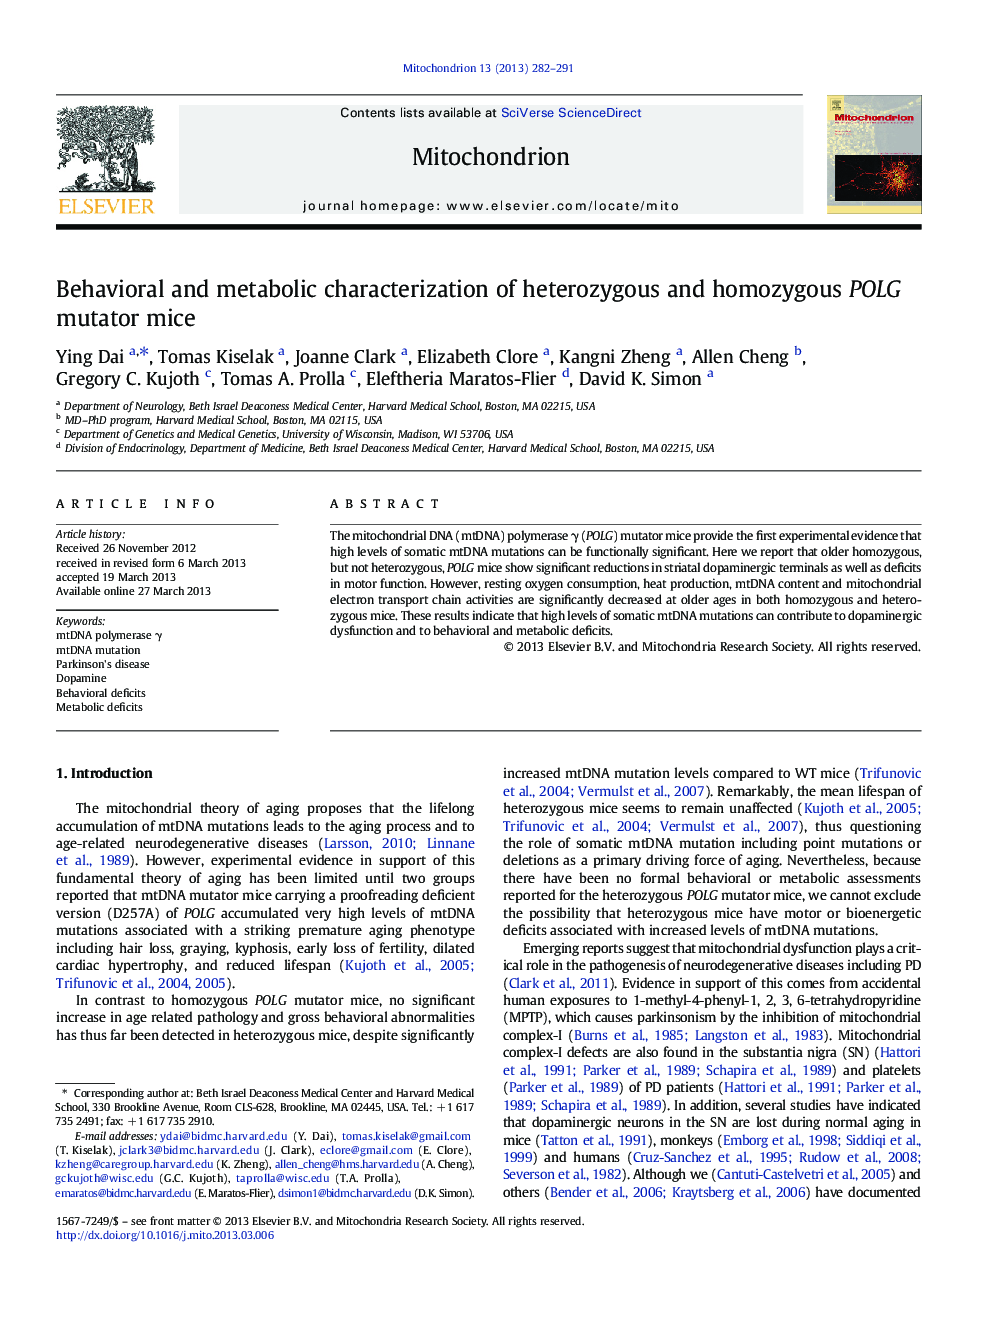 Behavioral and metabolic characterization of heterozygous and homozygous POLG mutator mice